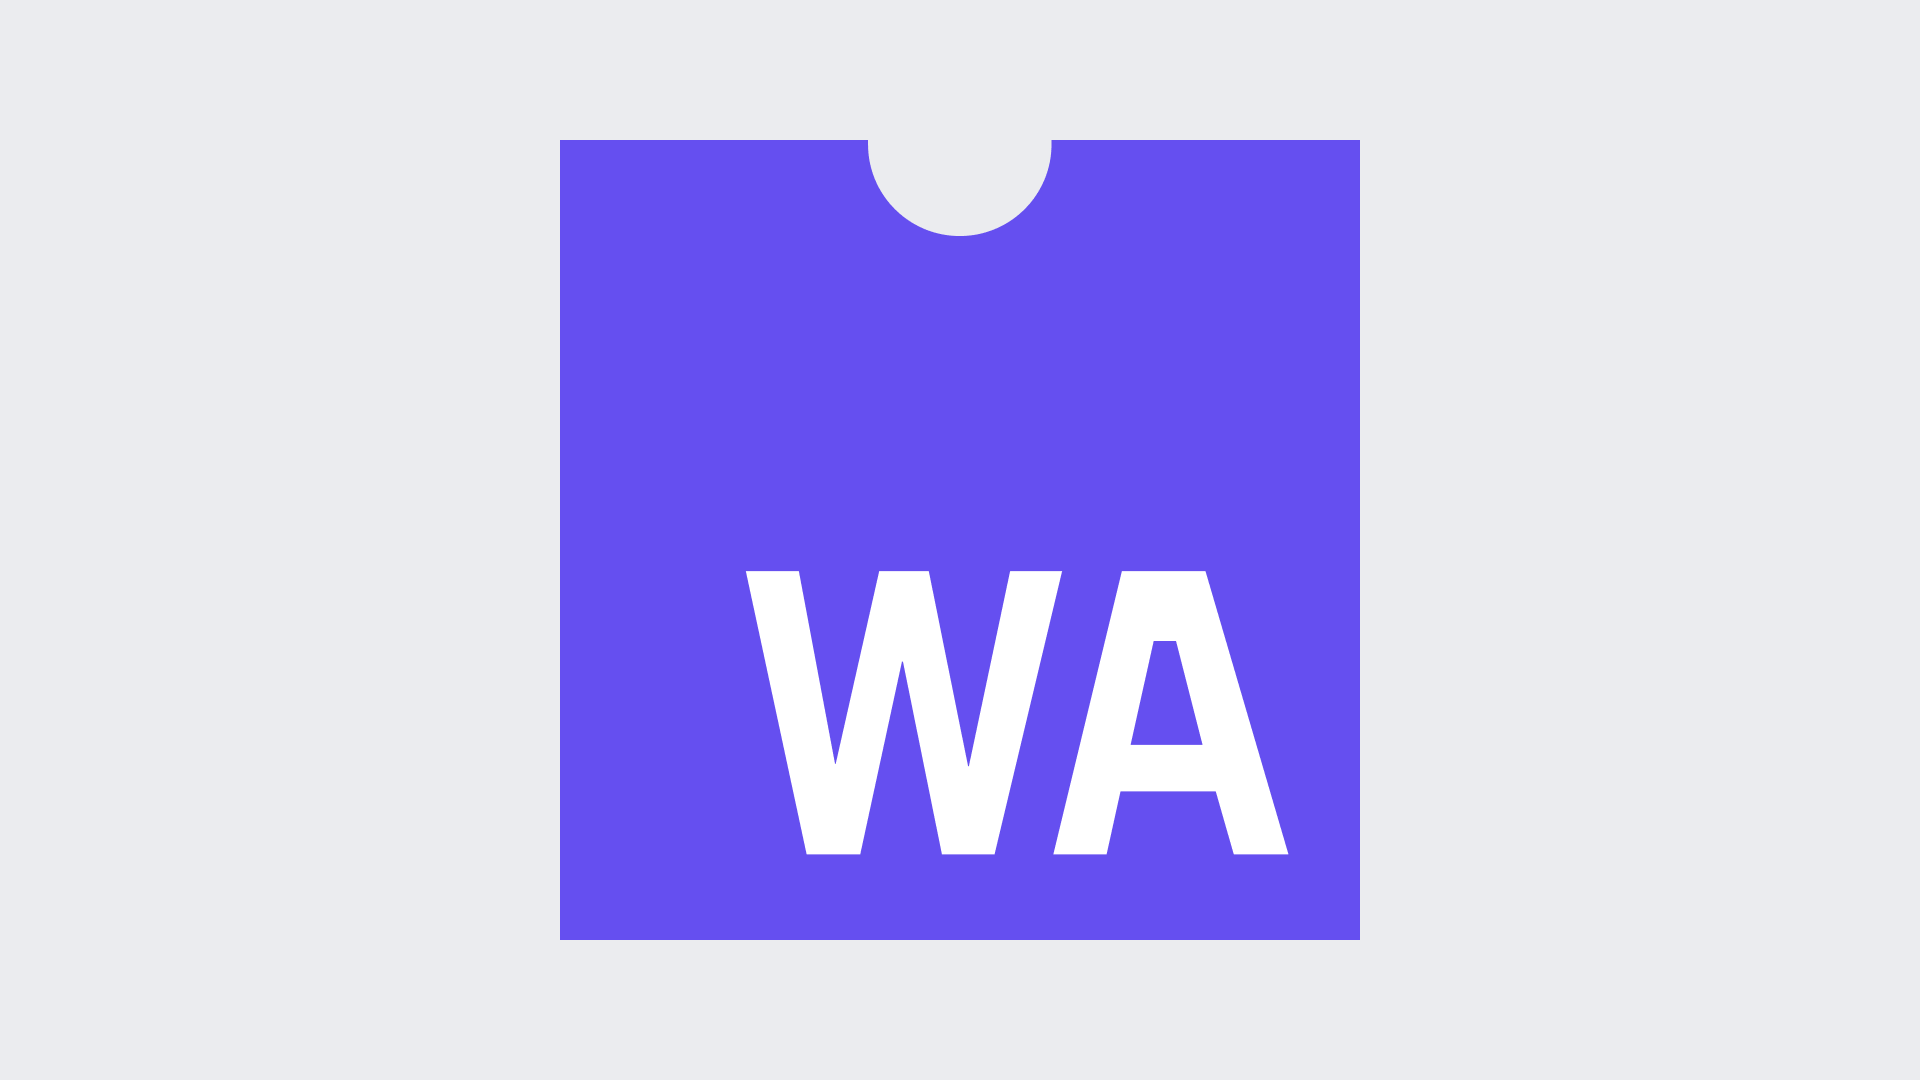 WebAssembly logo